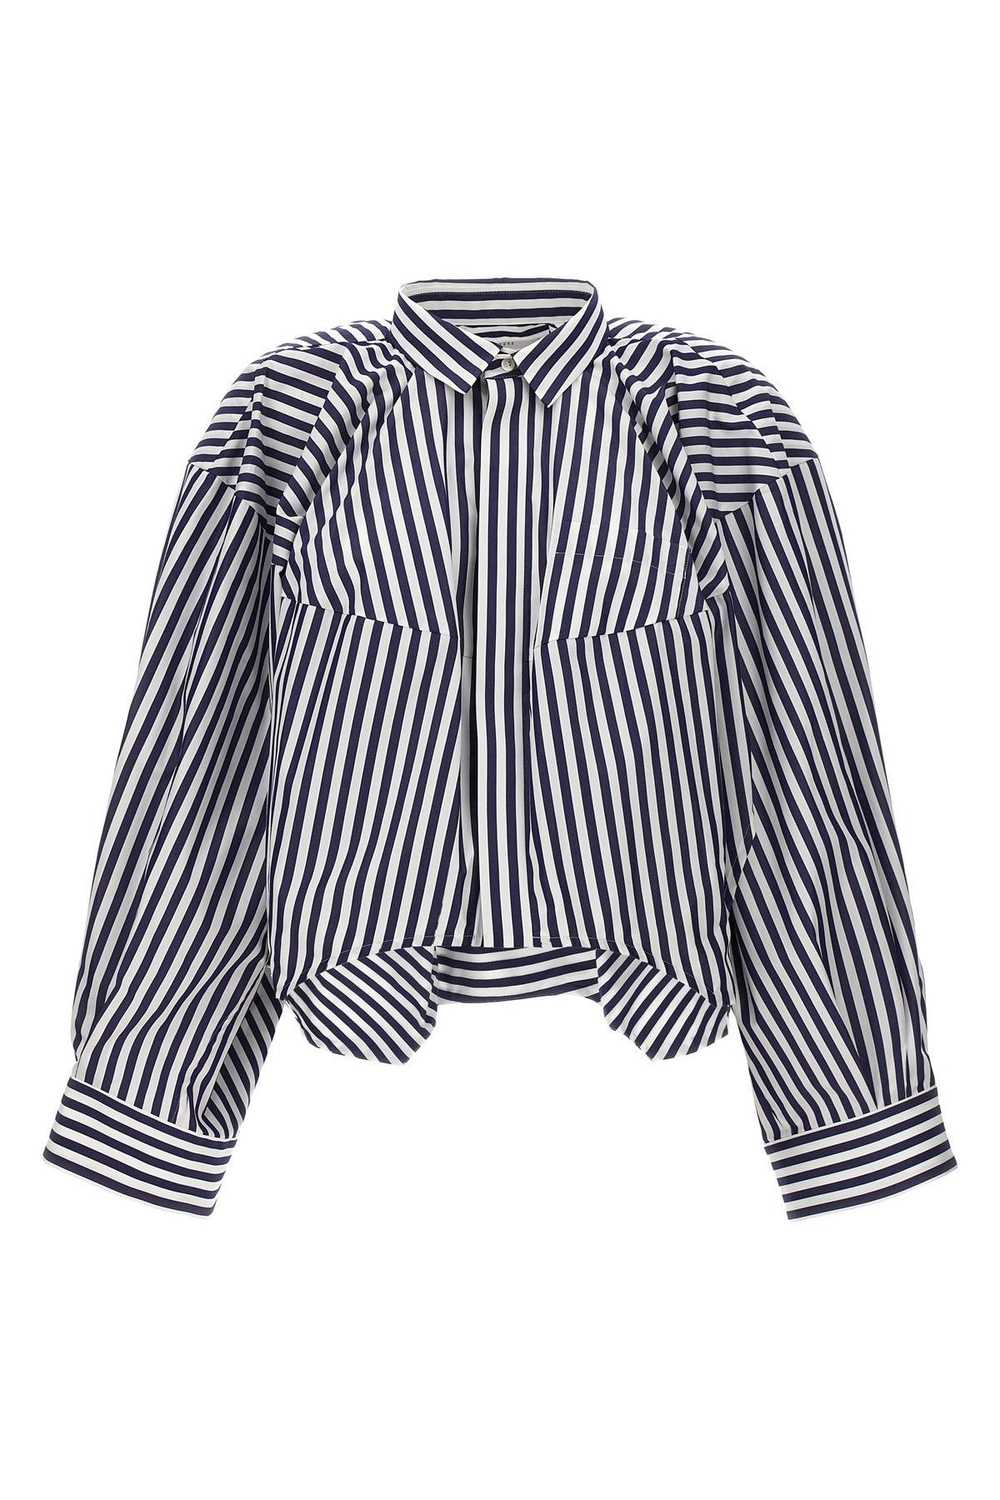 Sacai Striped shirt - image 1